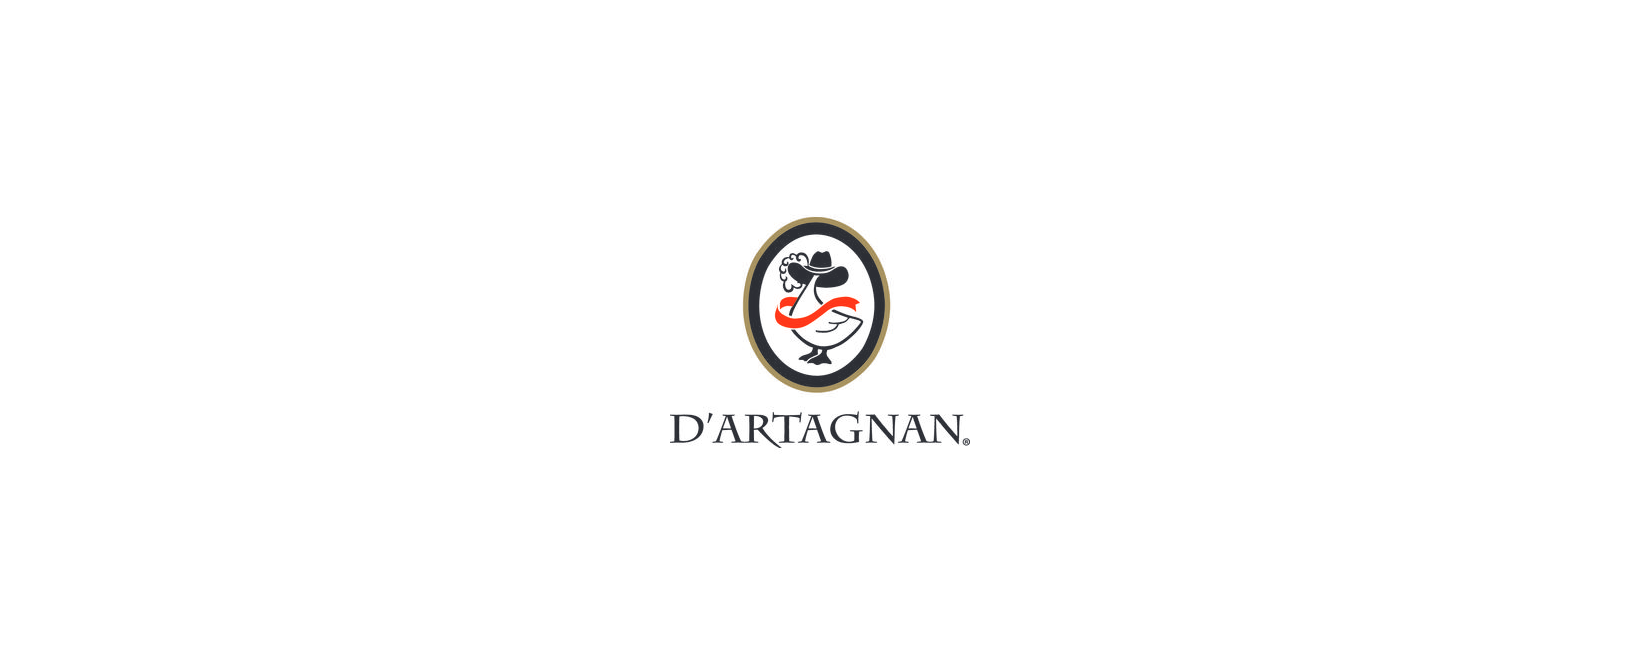 35 Off D'Artagnan Coupon Code Promo Code Updated 2022